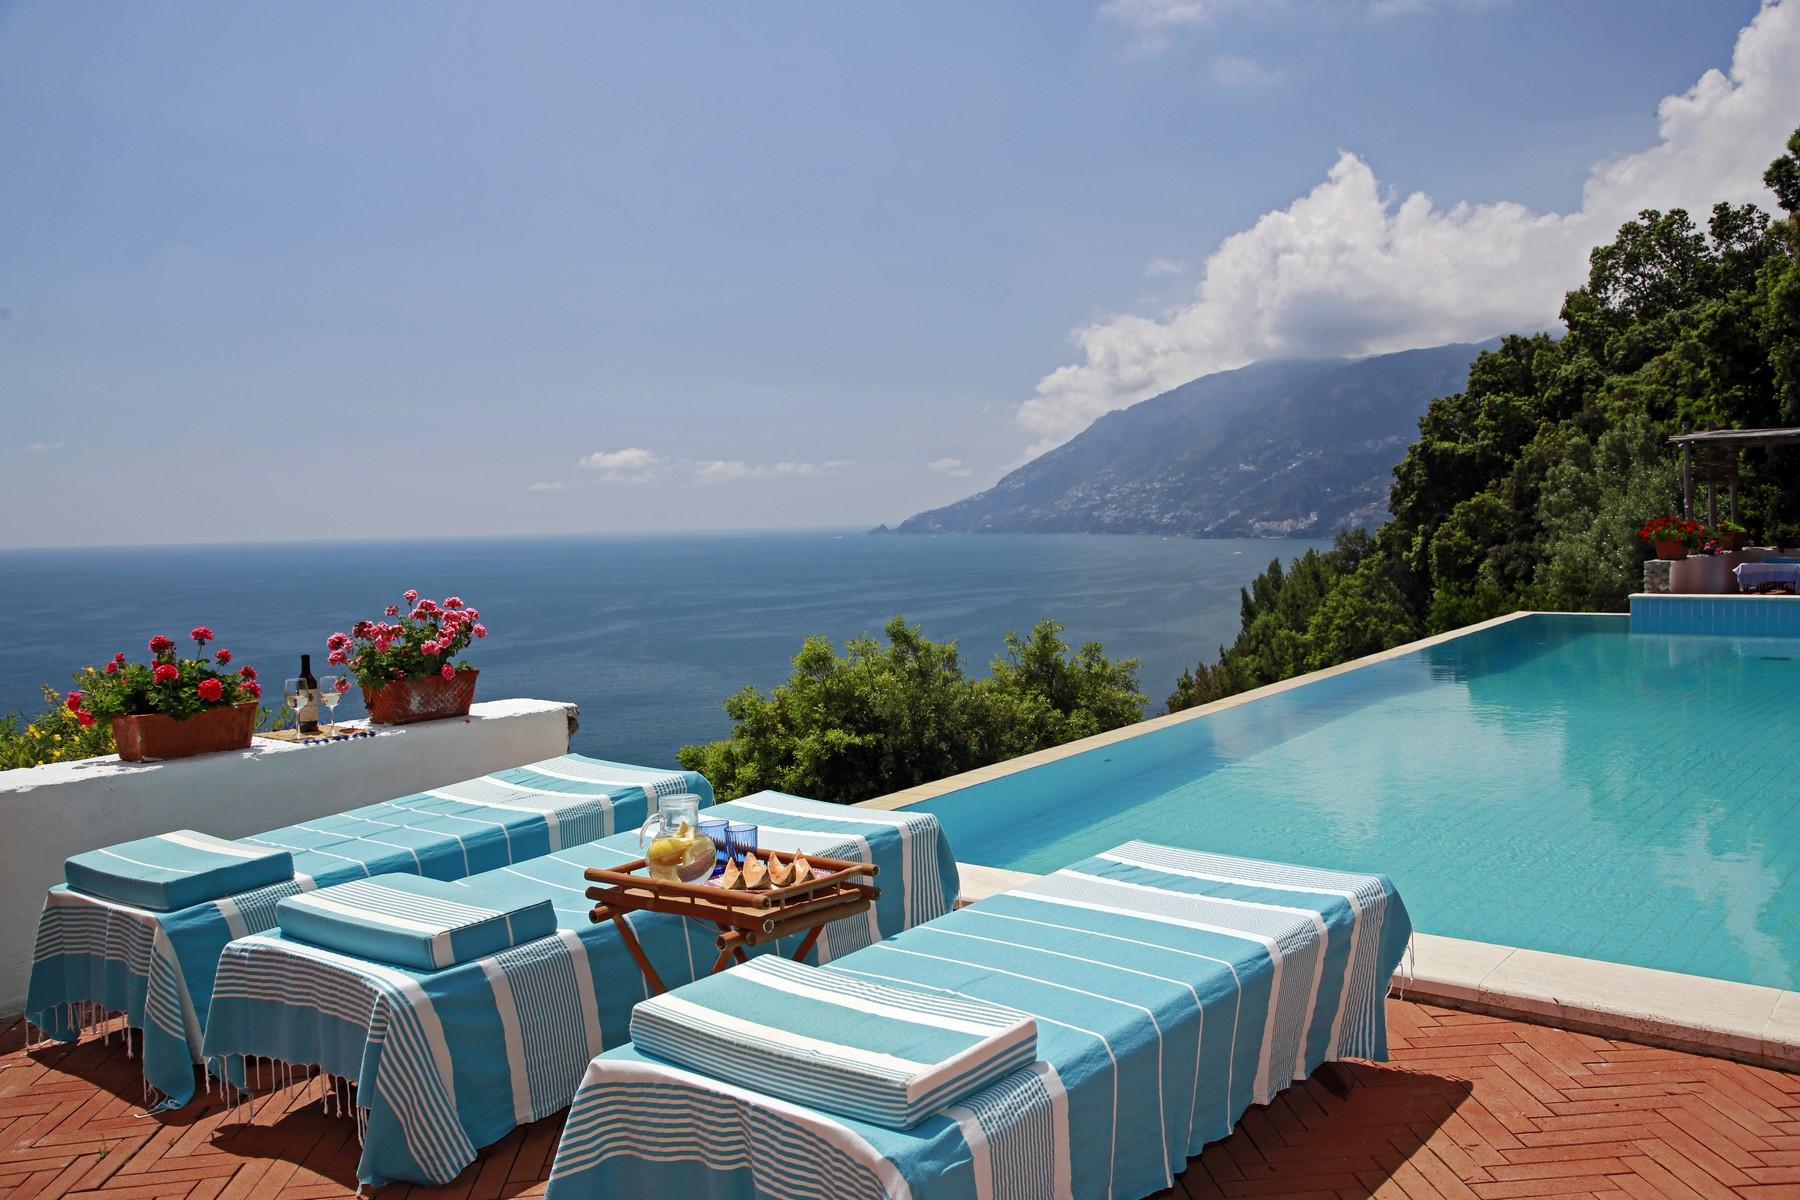 Villa pied dans l'eau on the Amalfi Coast - 1